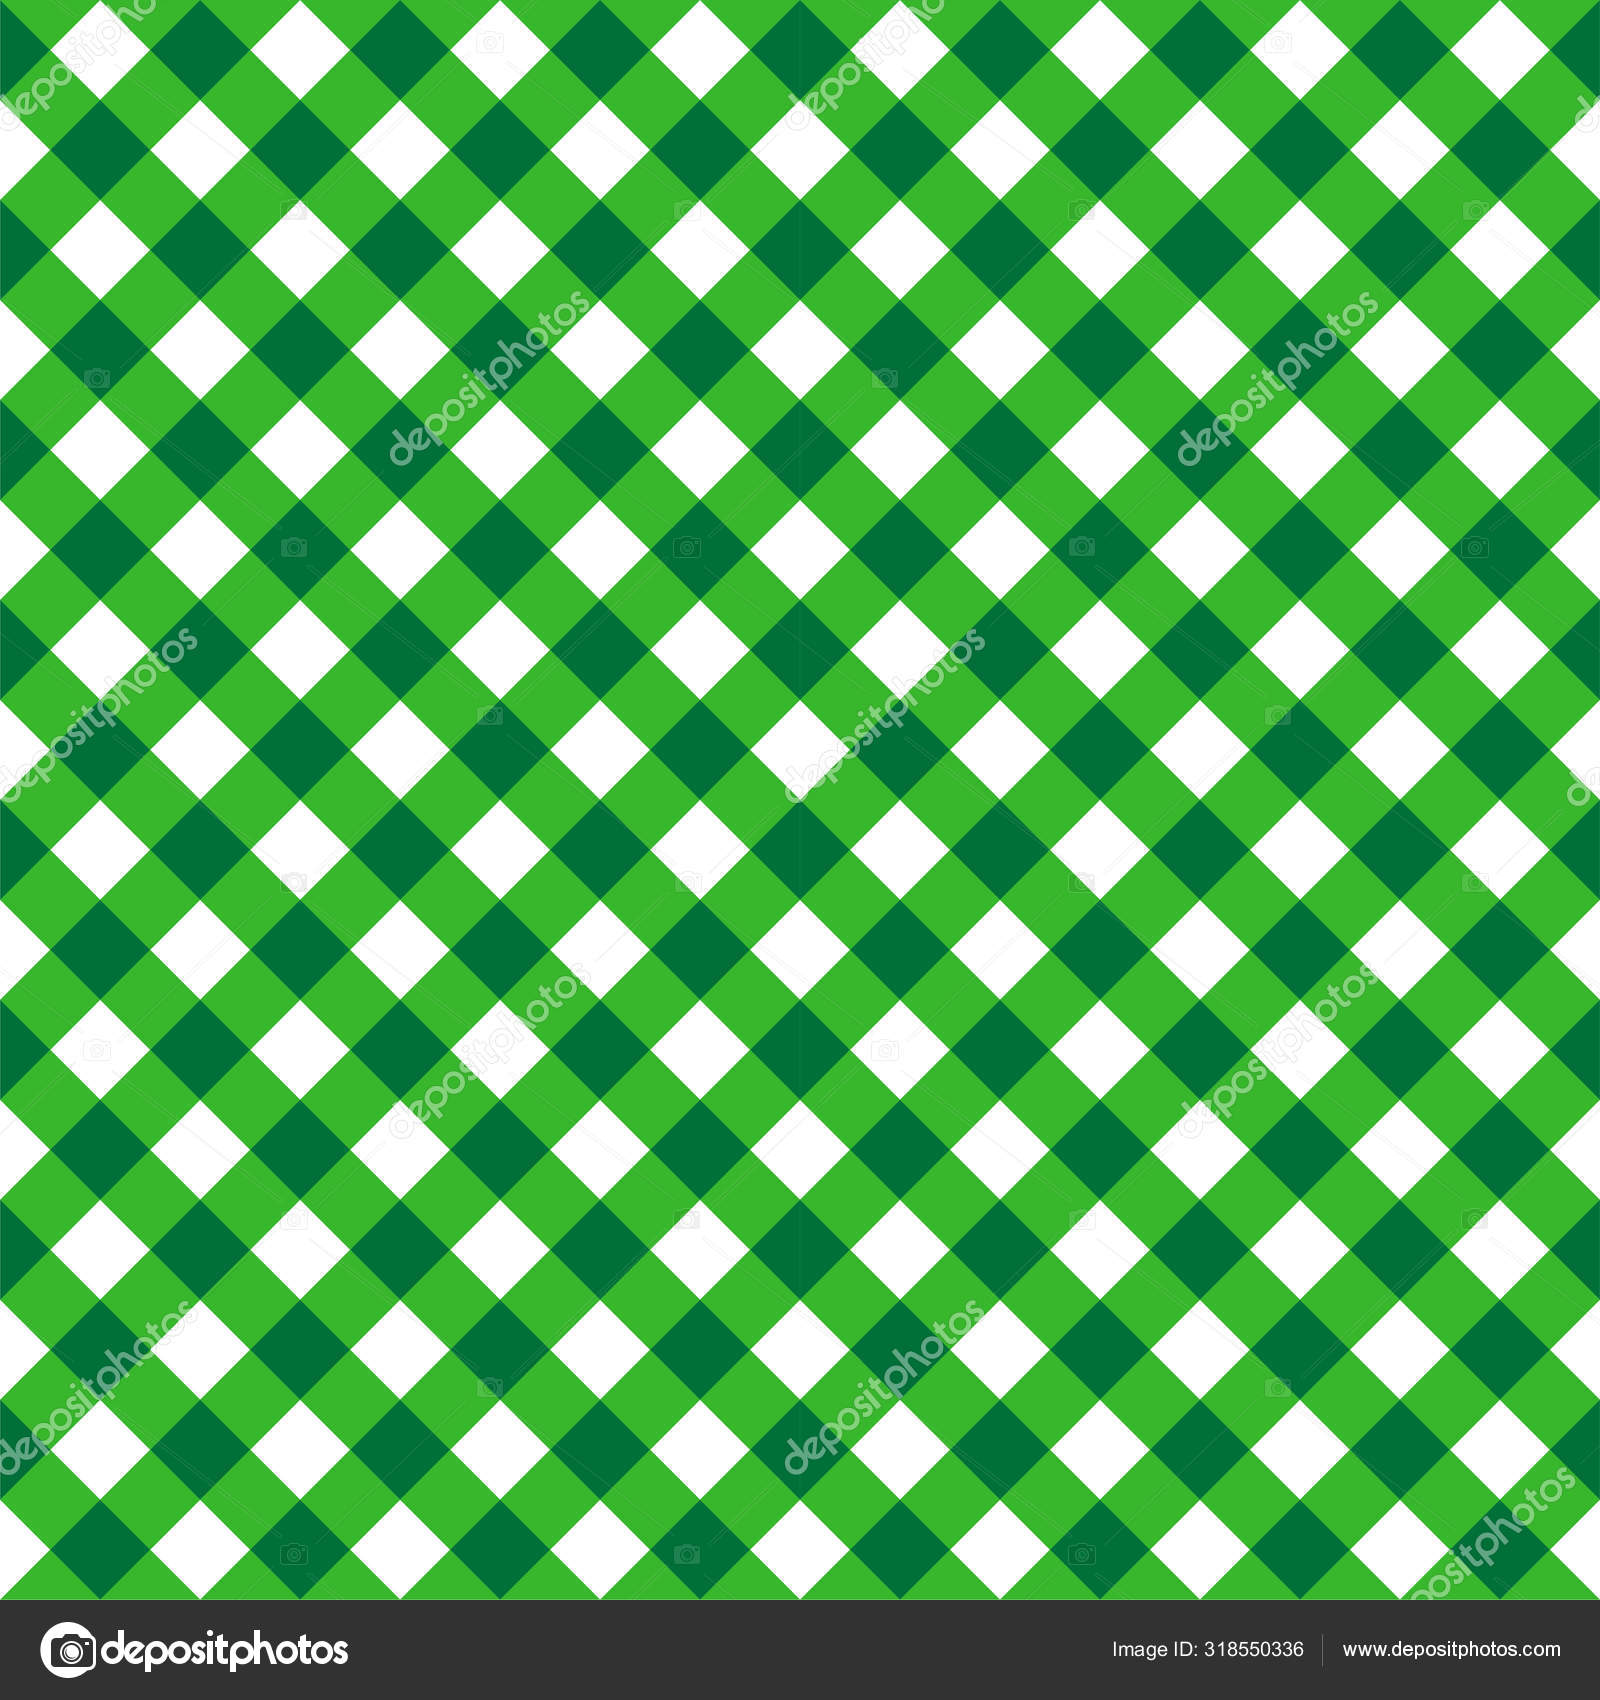 xadrez verde vermelho, xadrez, padrão sem emenda de tartan. papel